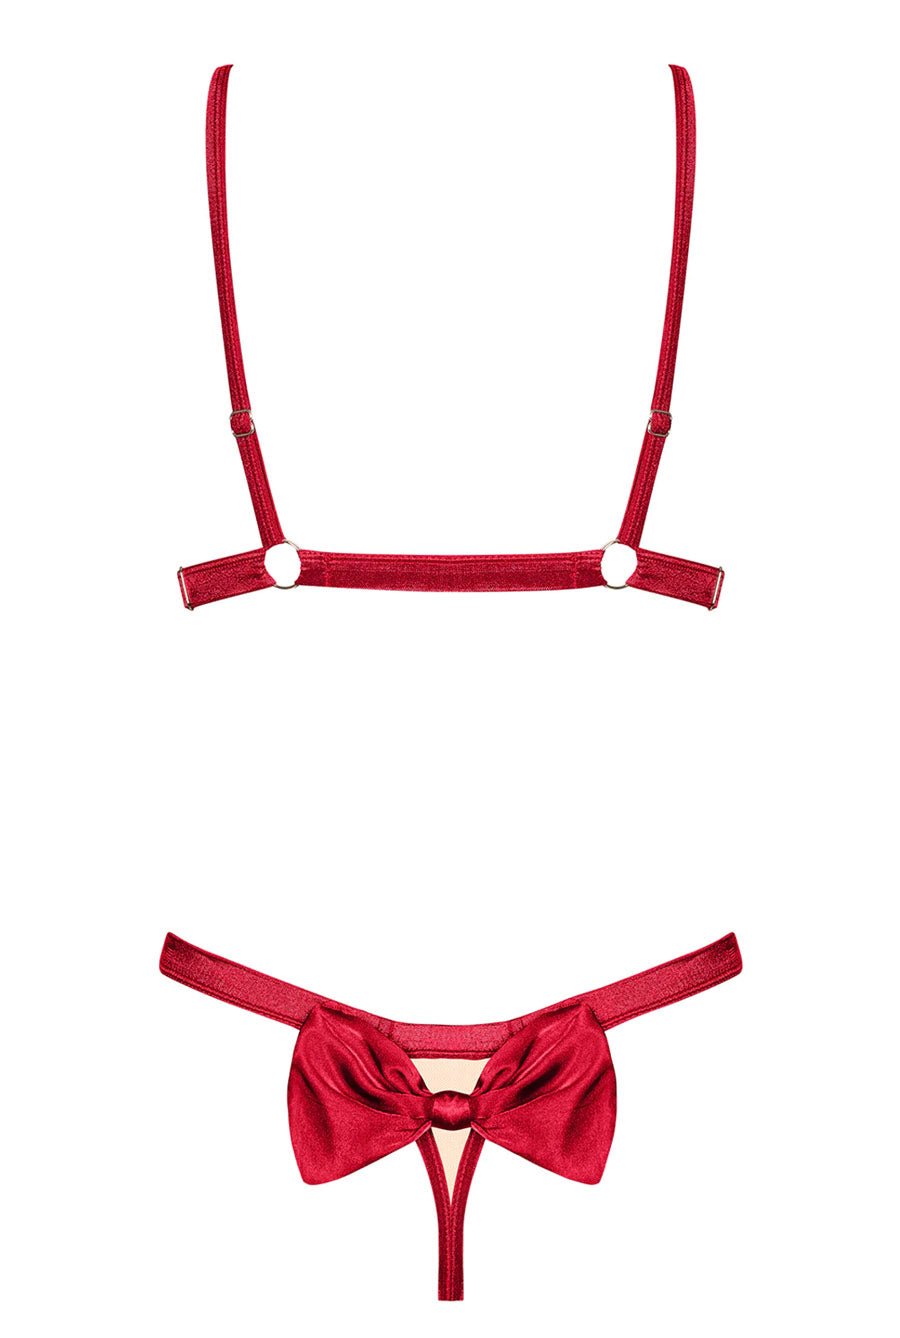 red bow satin lingerie